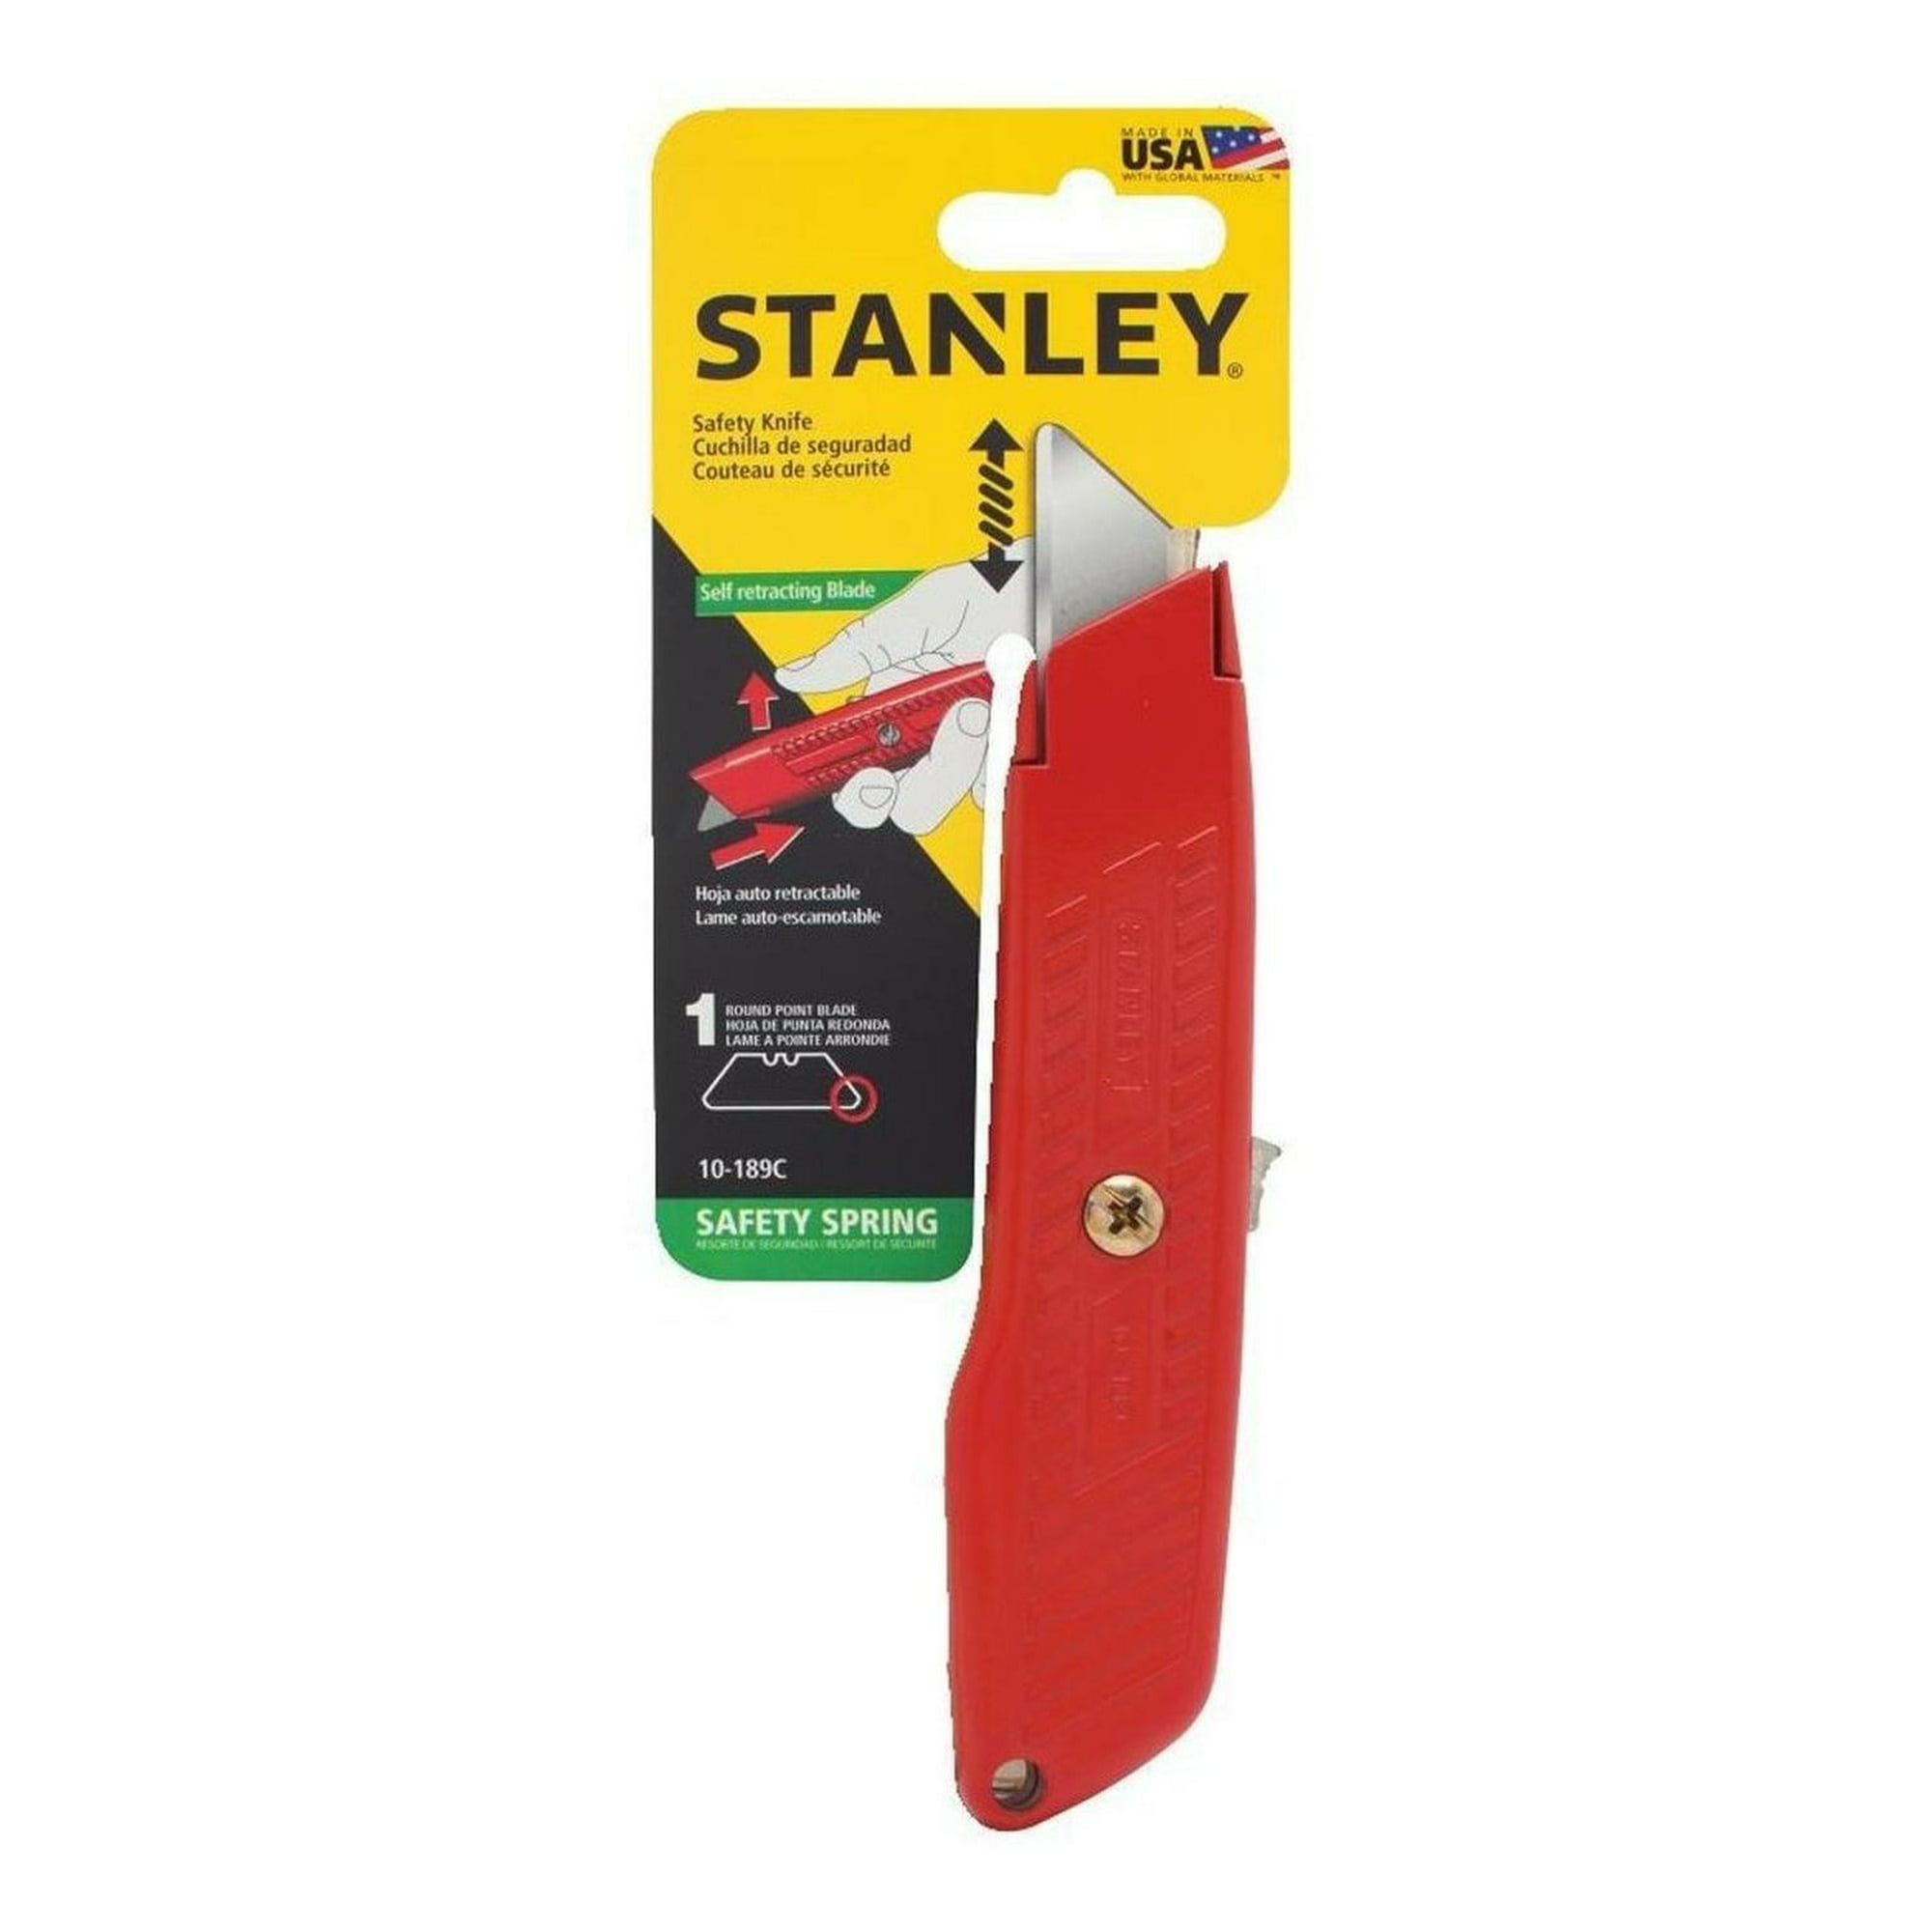 STANLEY® Cuchillo de electricista de doble hoja